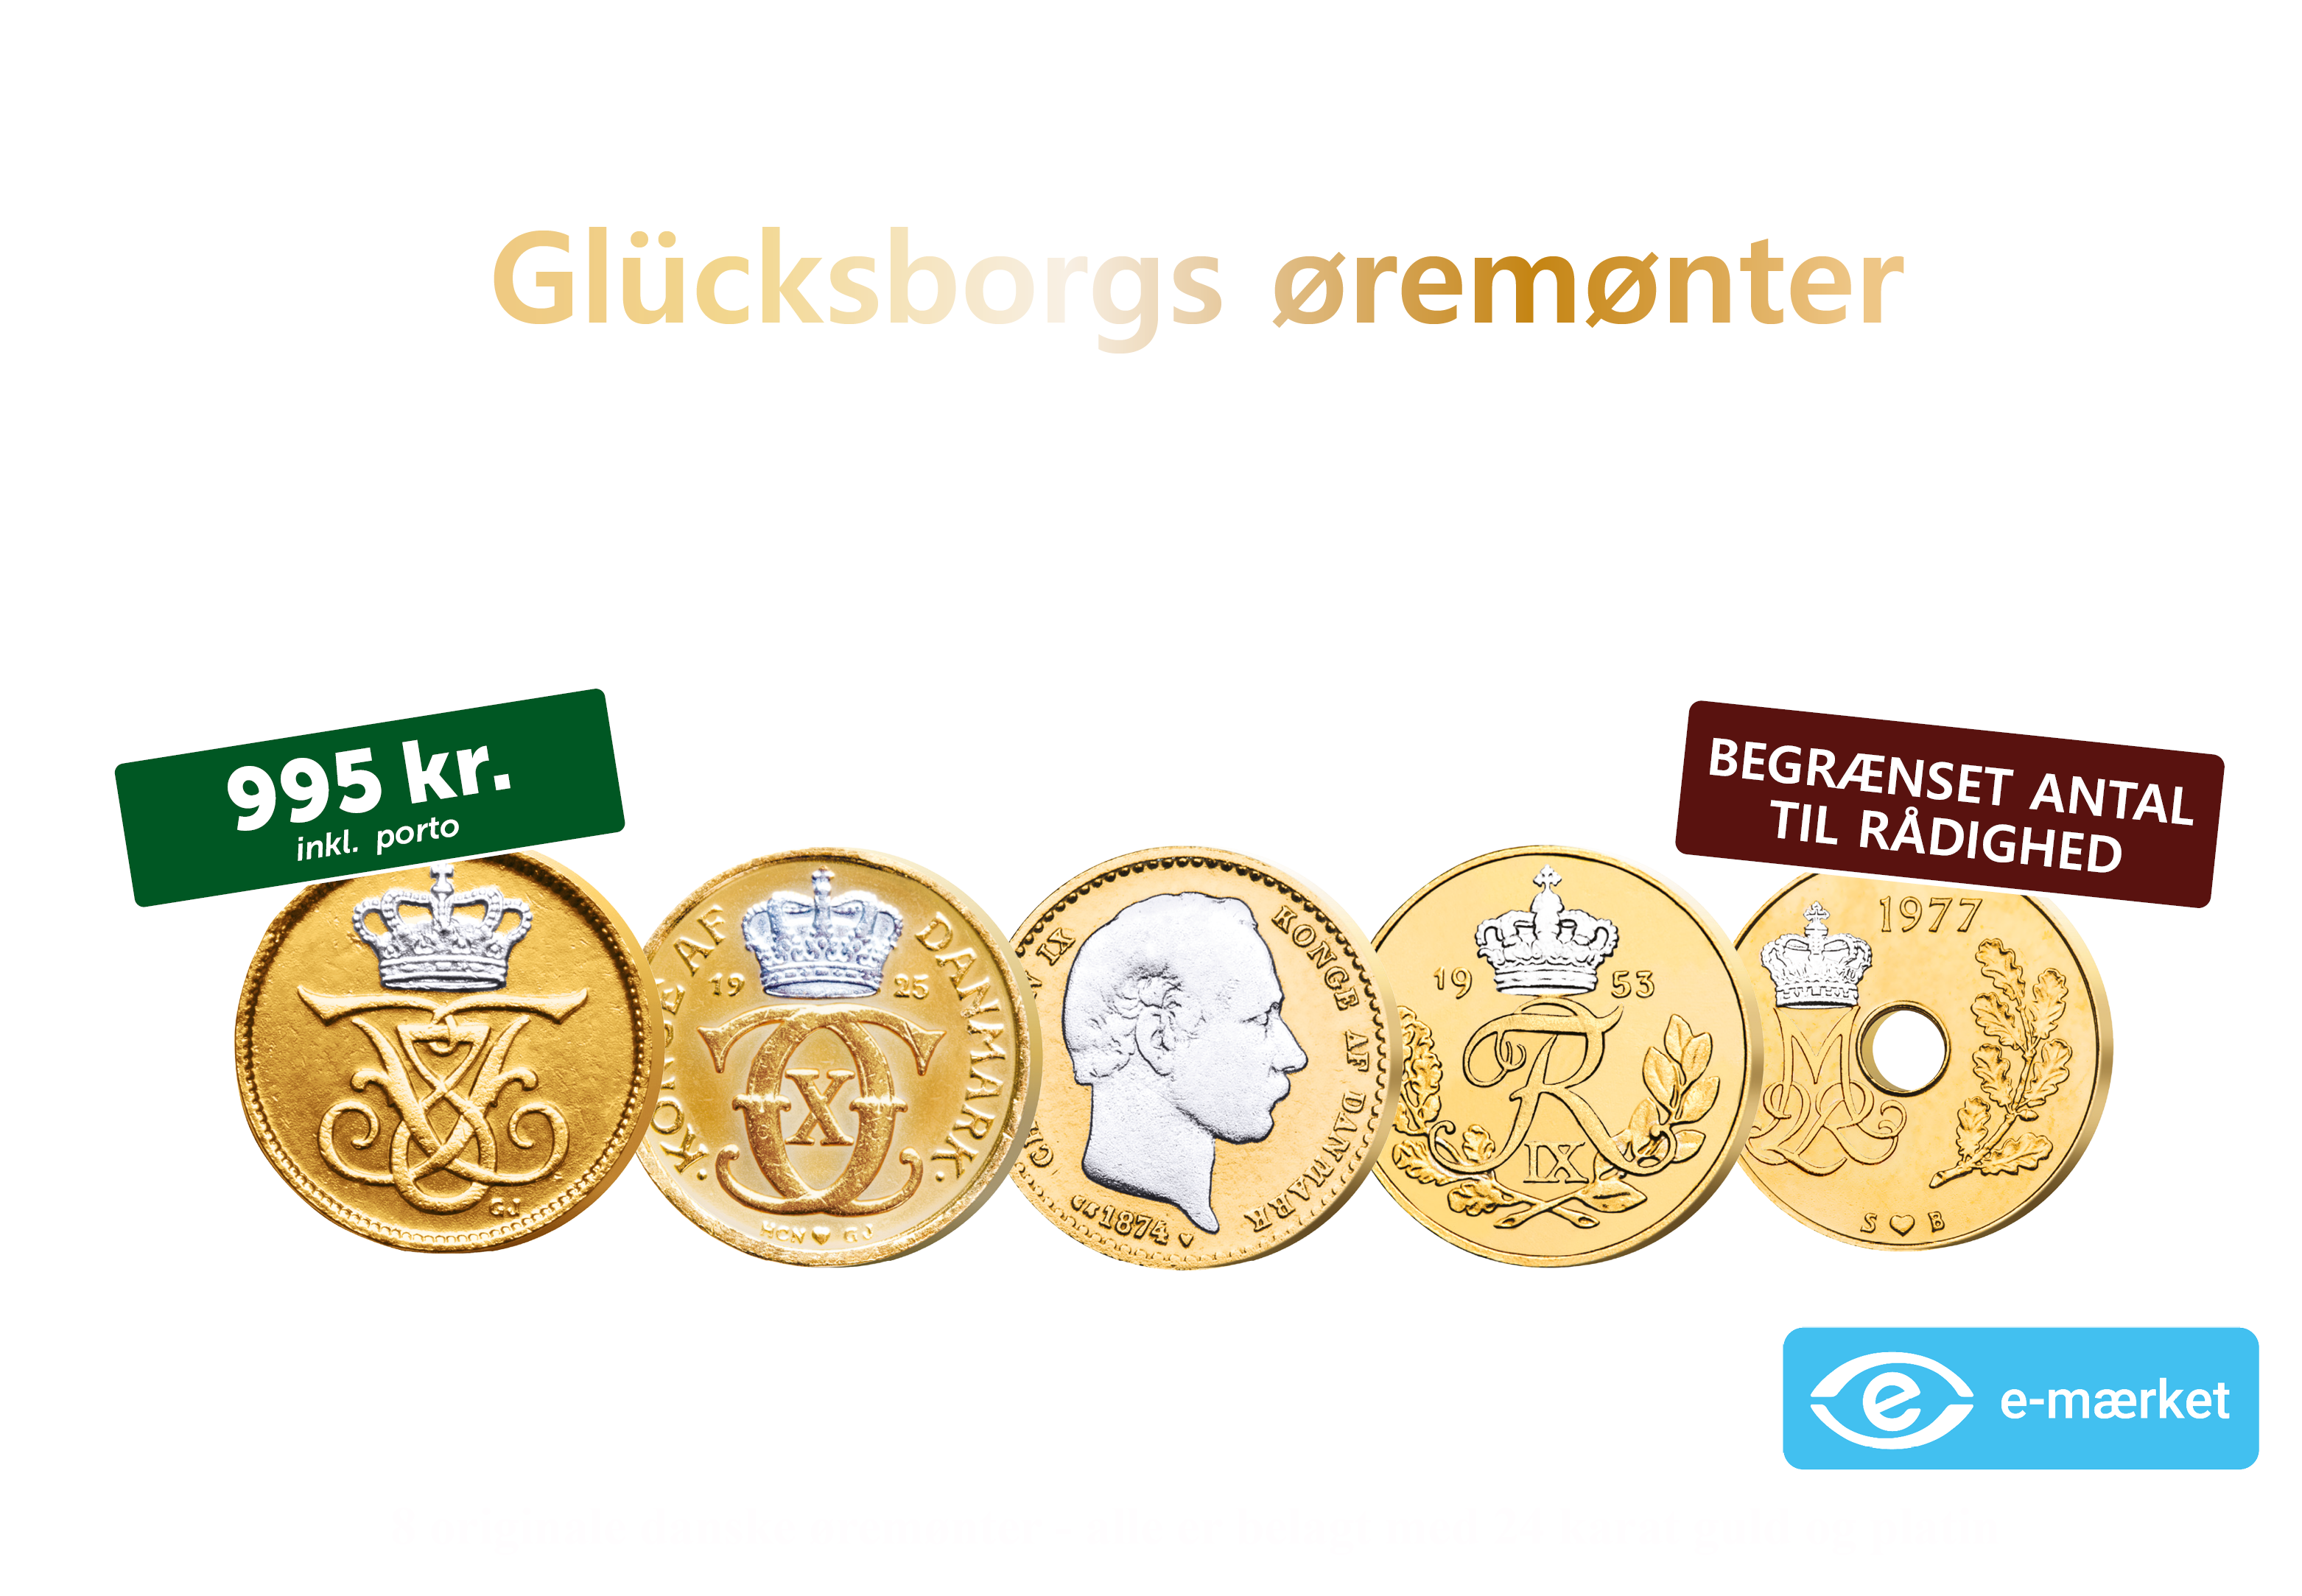 Glücksborgs øremønter - 8 øremønter fra Christian IX til Margrethe II 